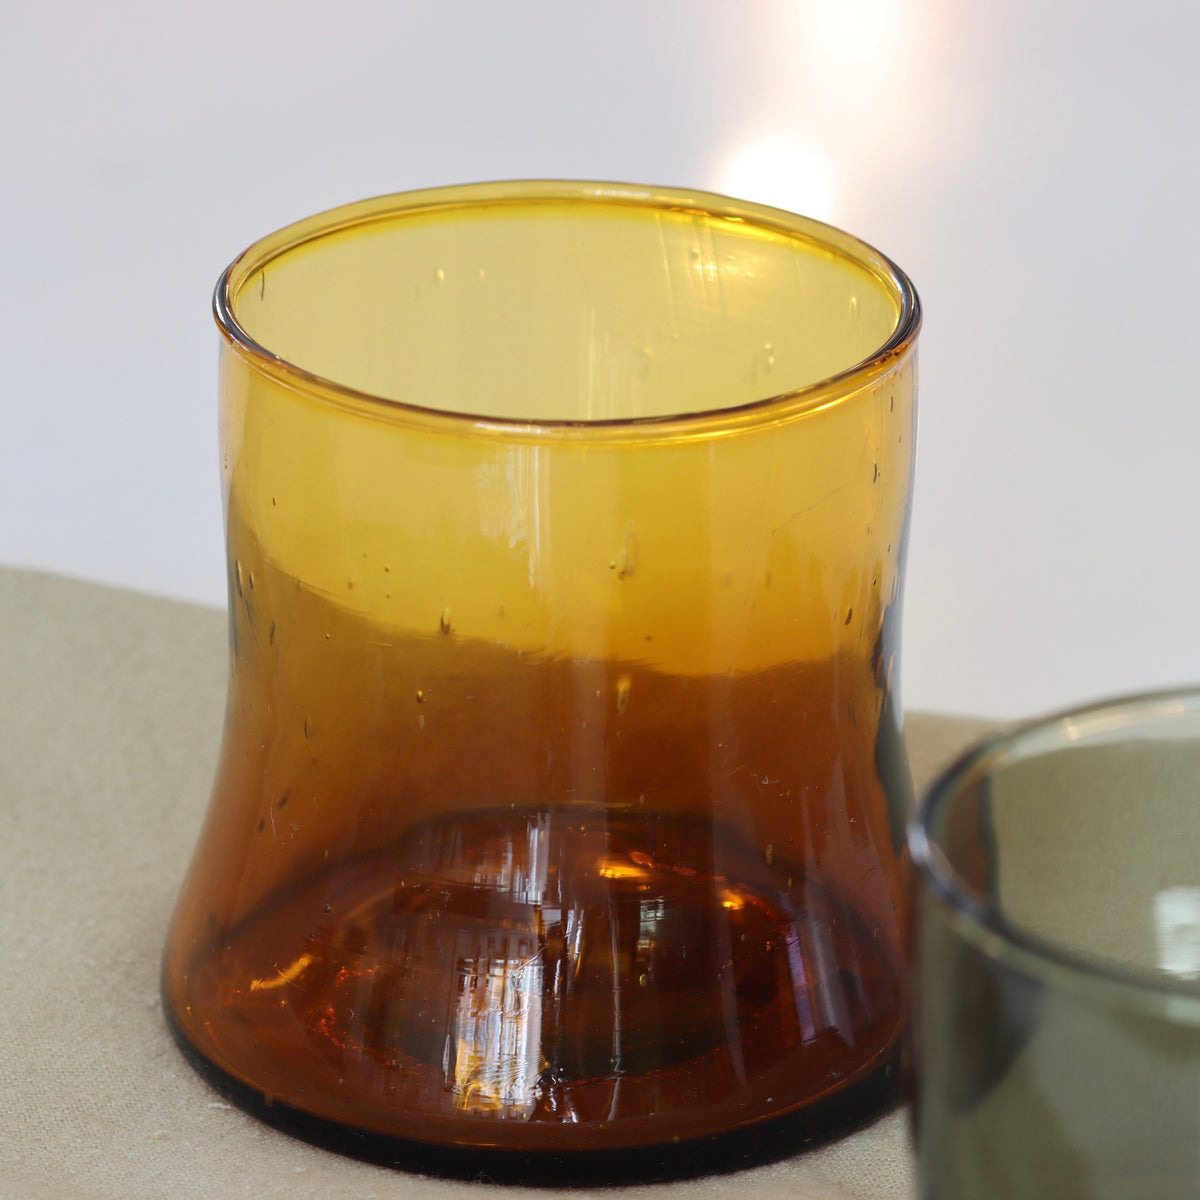 Verve Amber Drinking Glass - 10 oz - Holistic Habitat 